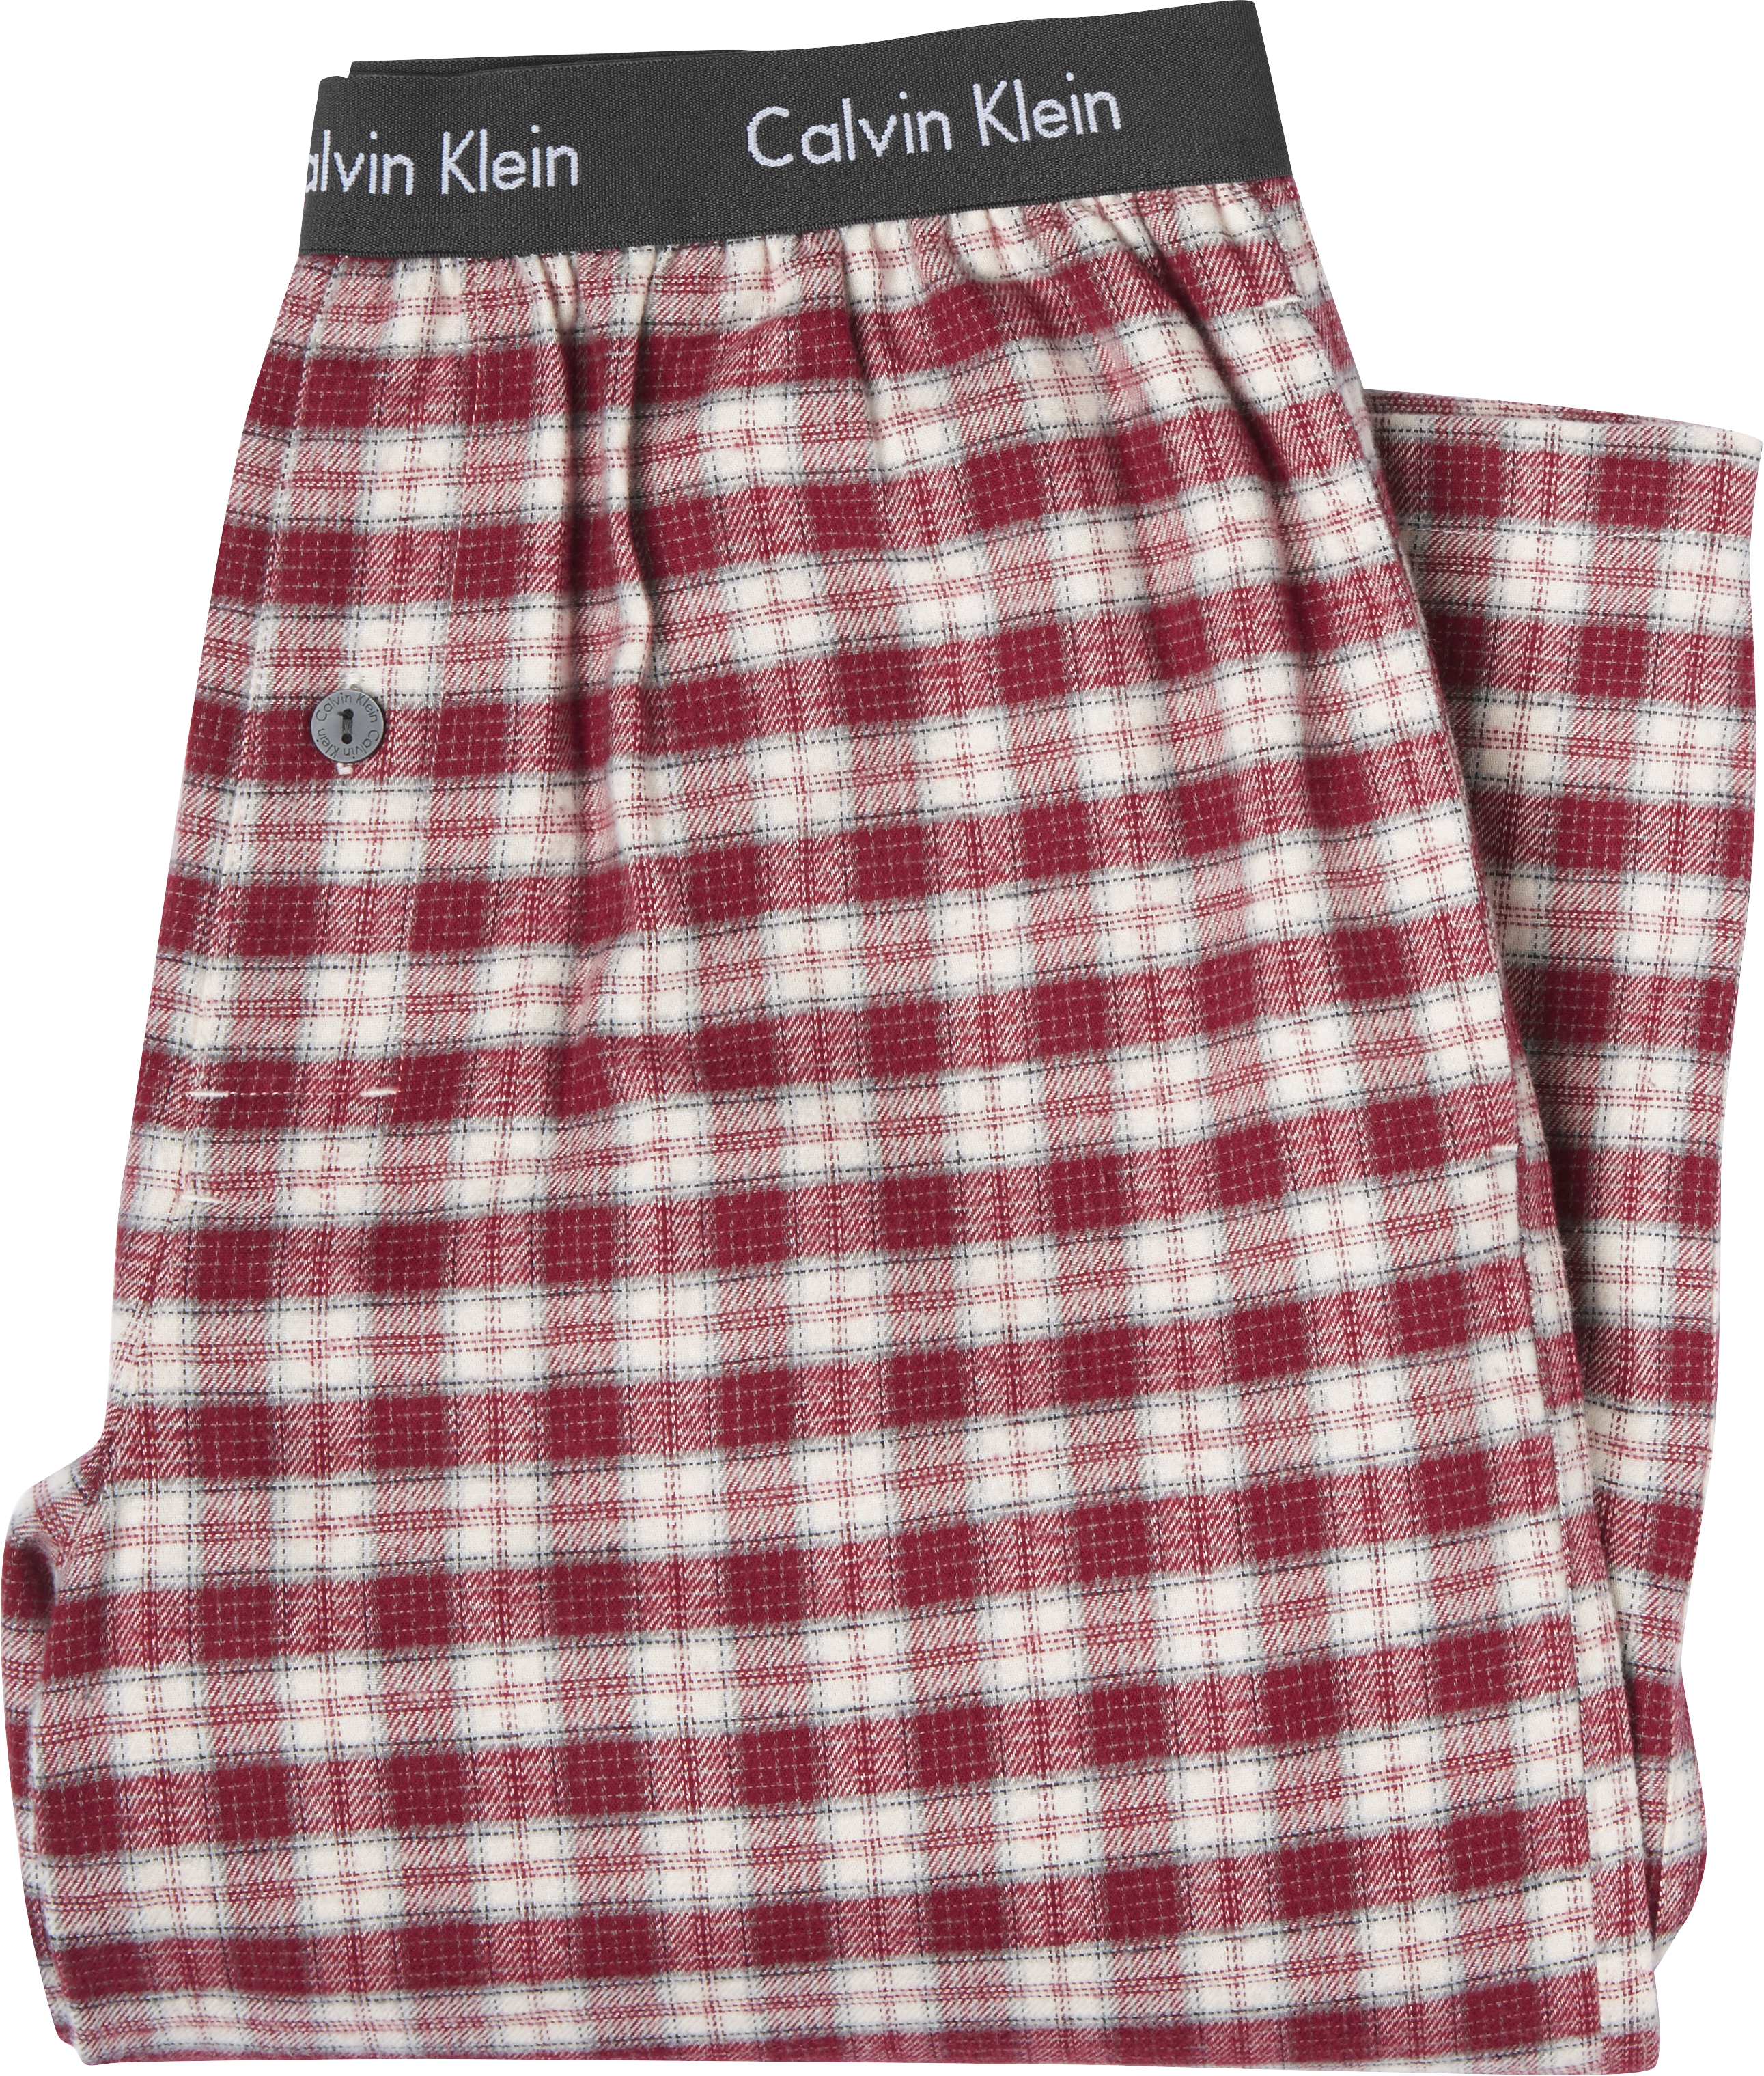 calvin klein flannel pajama pants